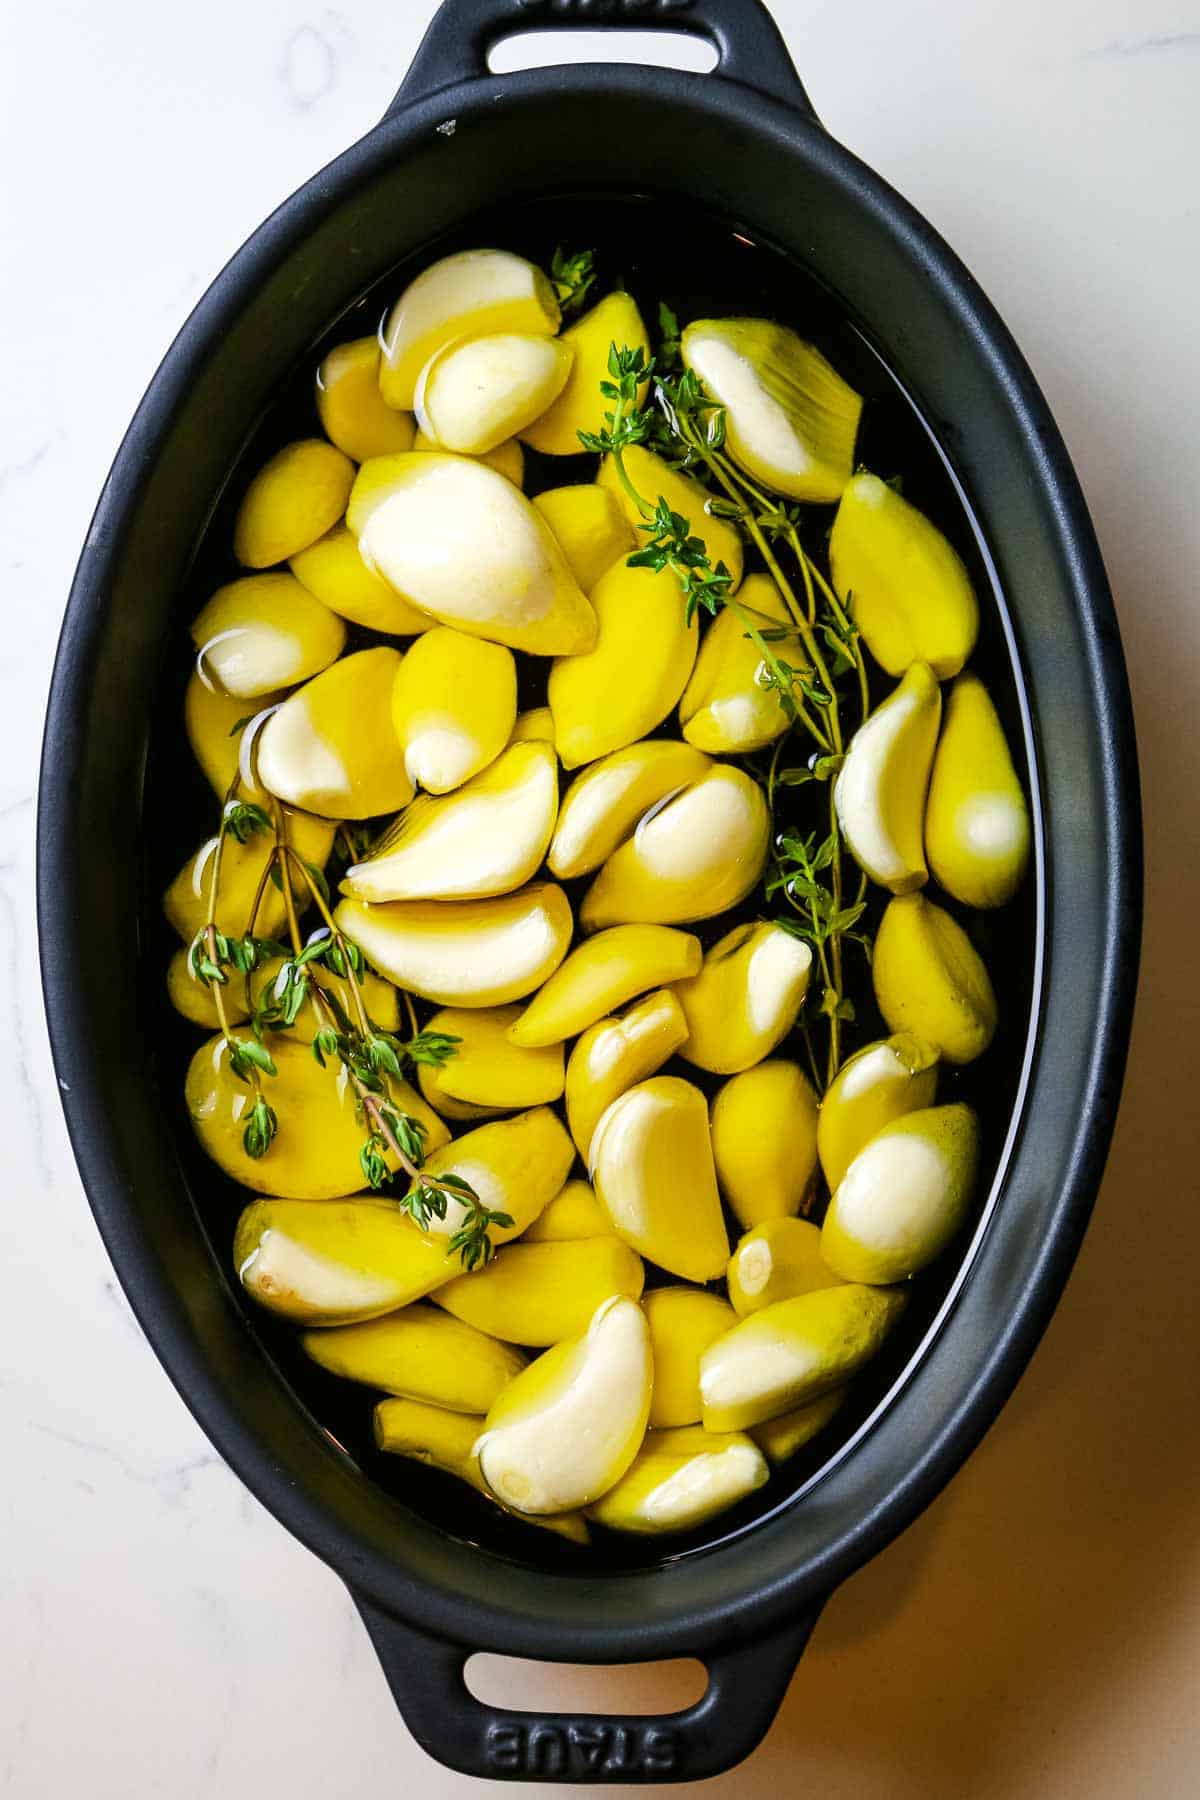 raw garlic cloves in olive oil.